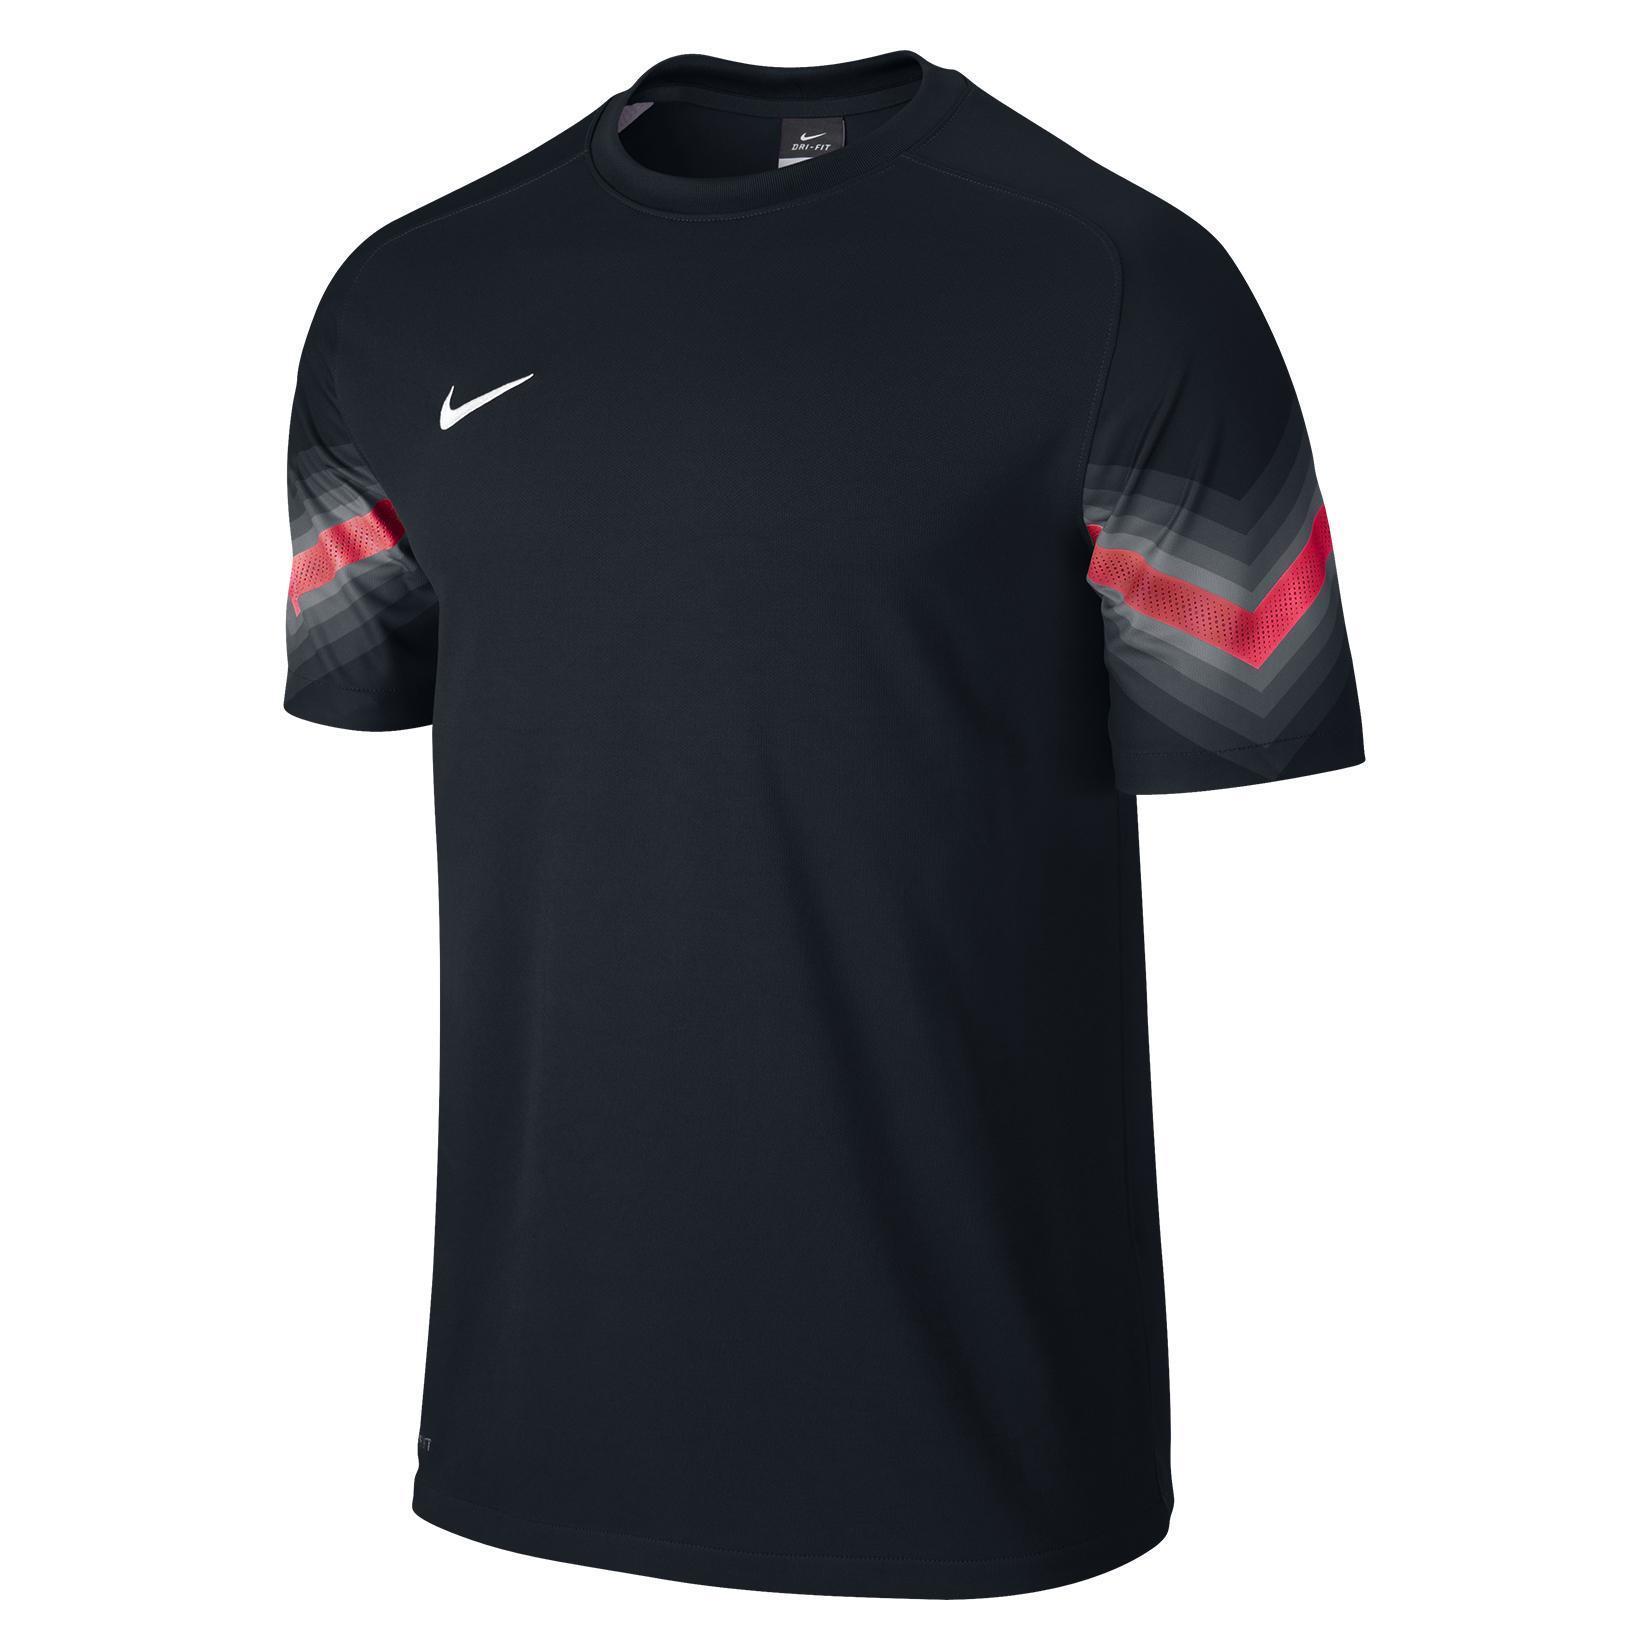 Nike Goleiro Adults Short Sleeve Football Goalkeeper Kit - Kitlocker.com